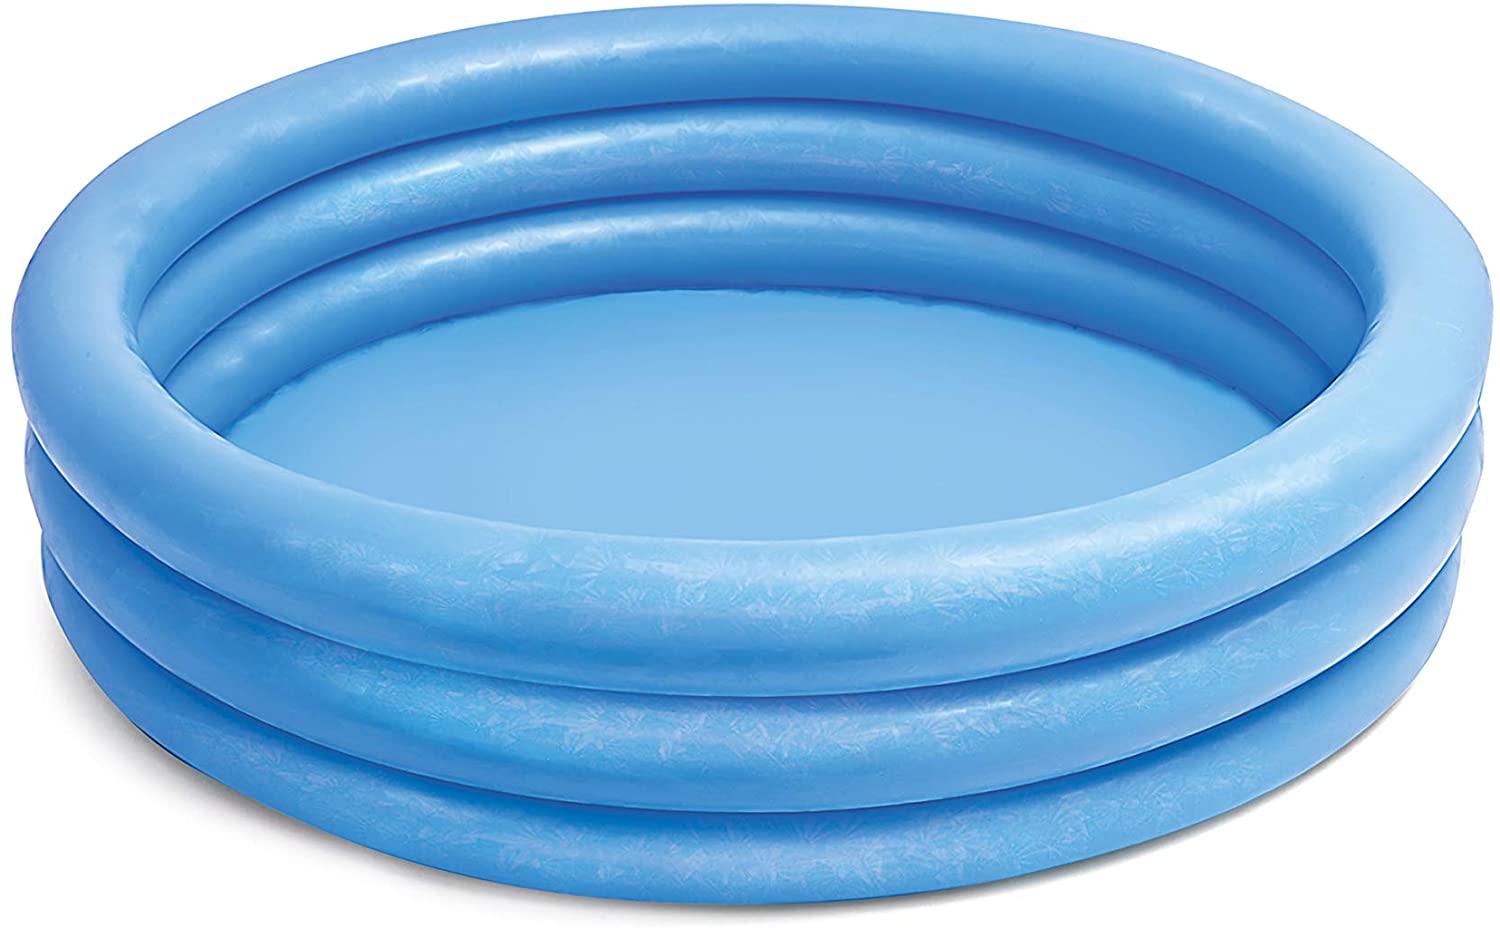 Intex Crystal Blue Easy Clean Inflatable Baby Pool